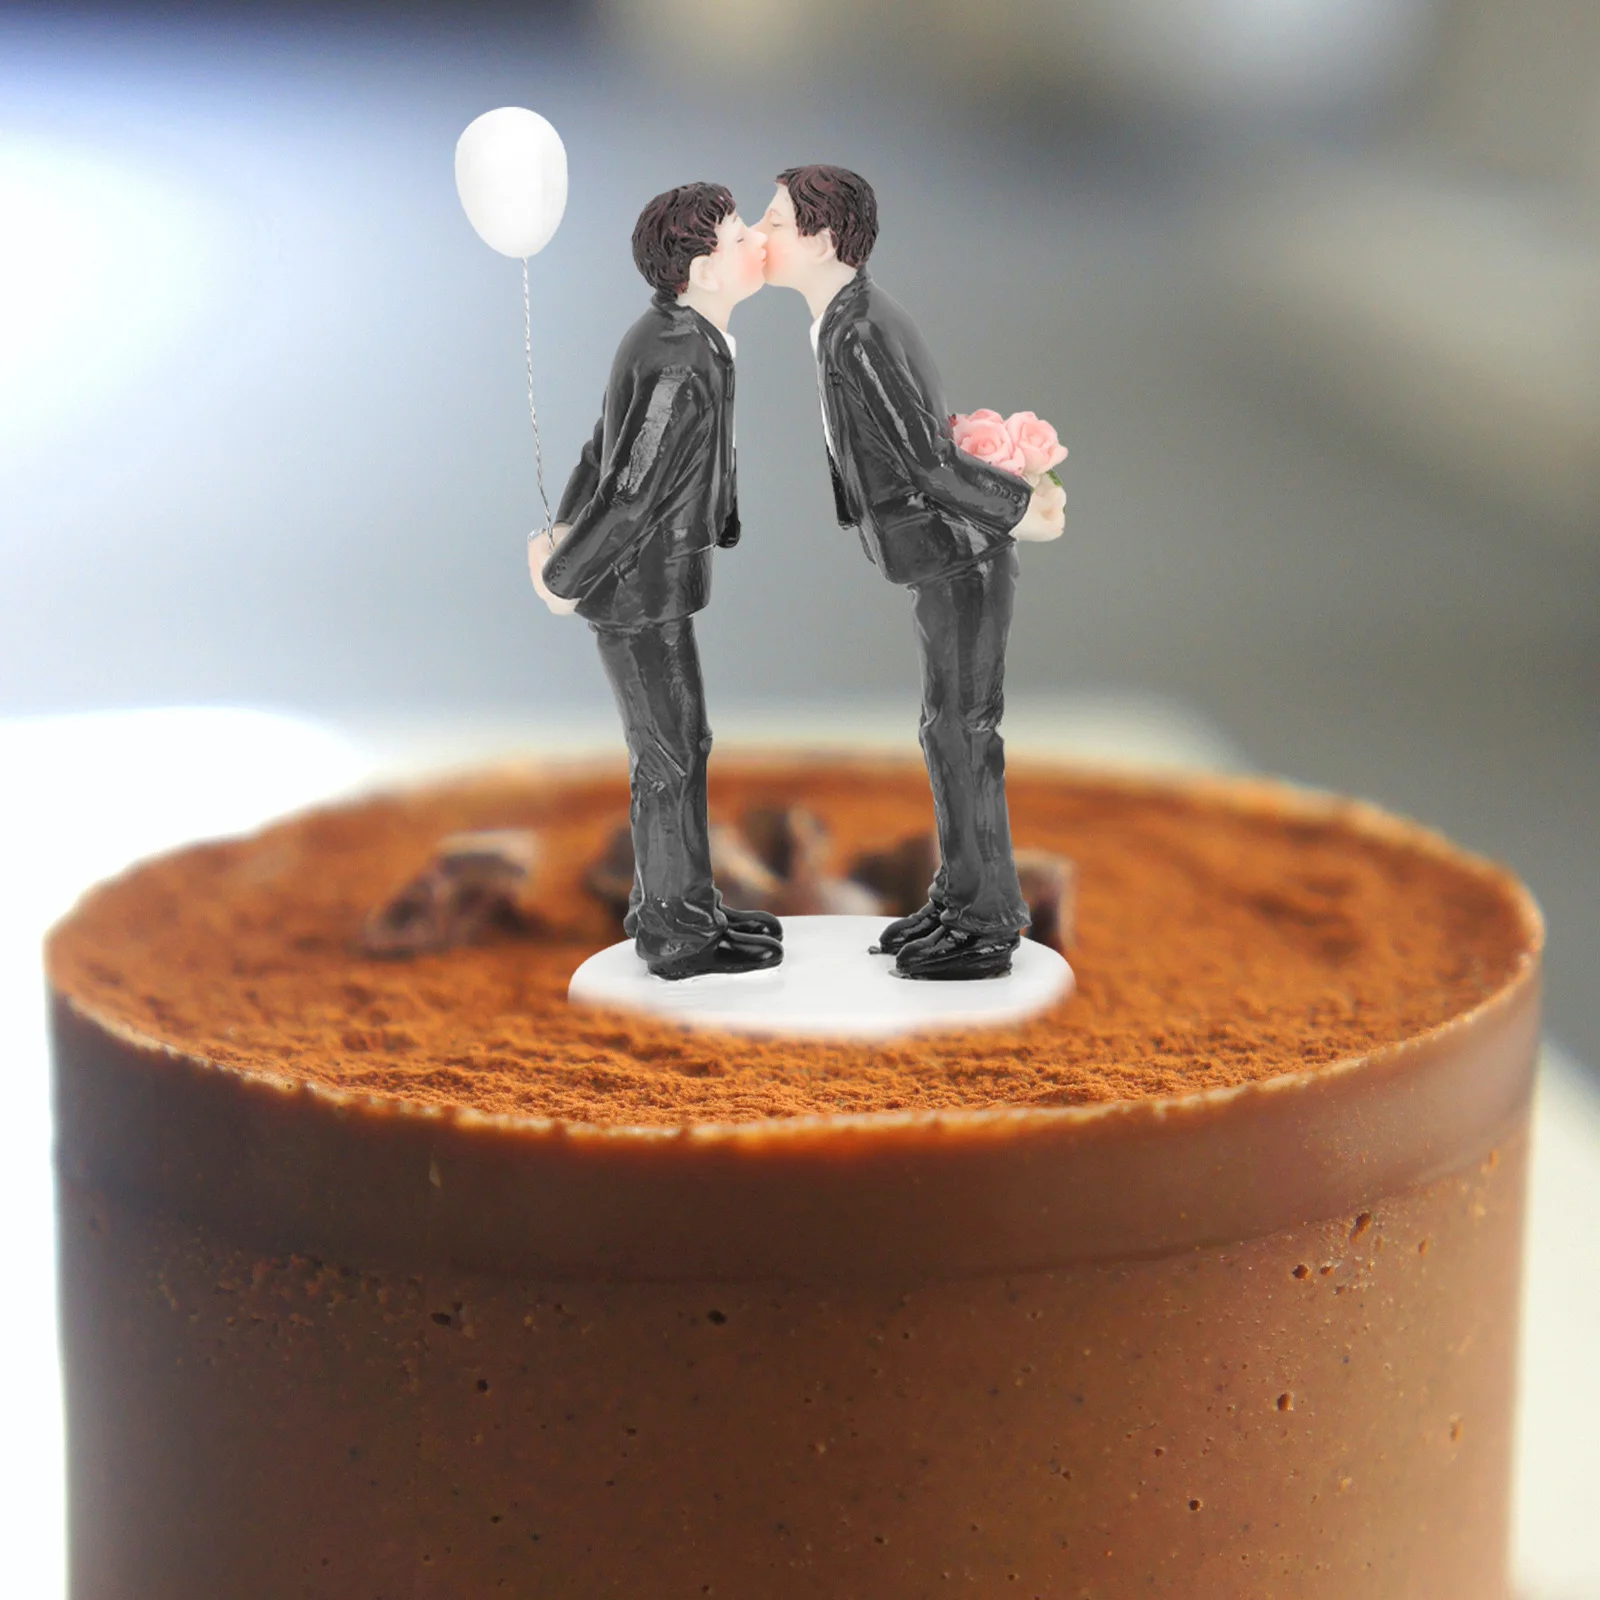 

Gay Wedding Cakes Toppers Couple Figurine Cakes Toppers Wedding Collectibles Romance Gay Figurine Groom Groom Cake Decor